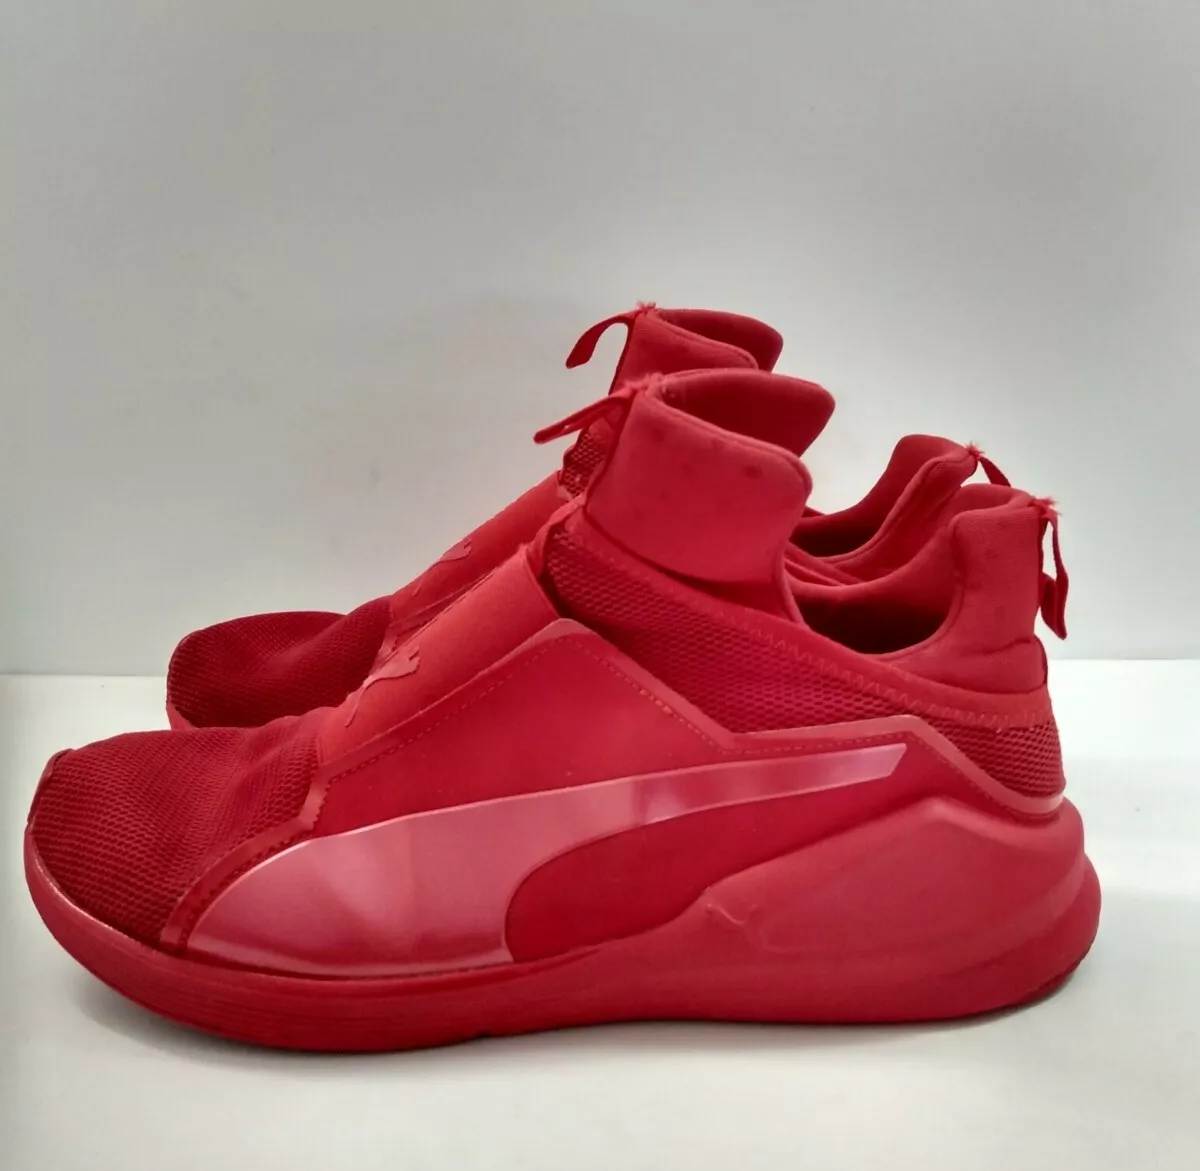 190292-03] Mens Puma Fierce Core - Red Training Size 10.5 | eBay